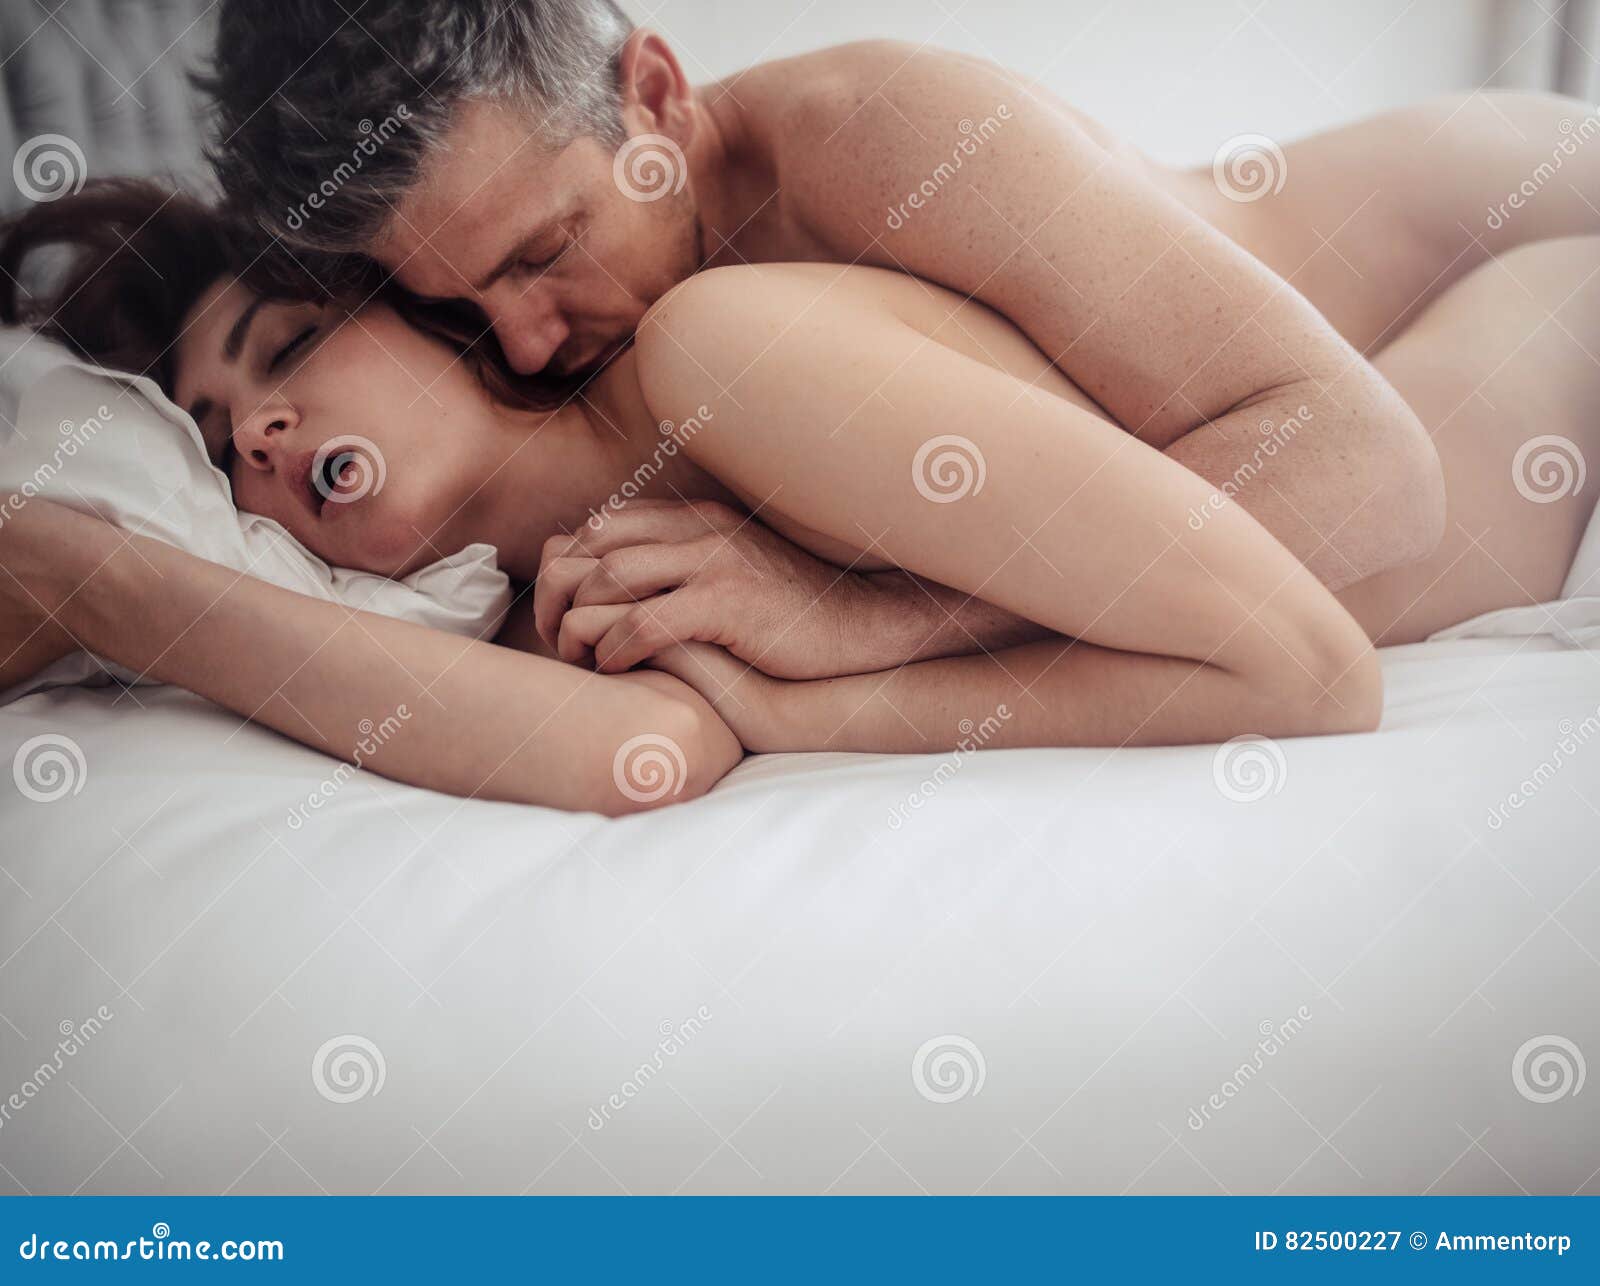 Asian Lesbians Having Sex